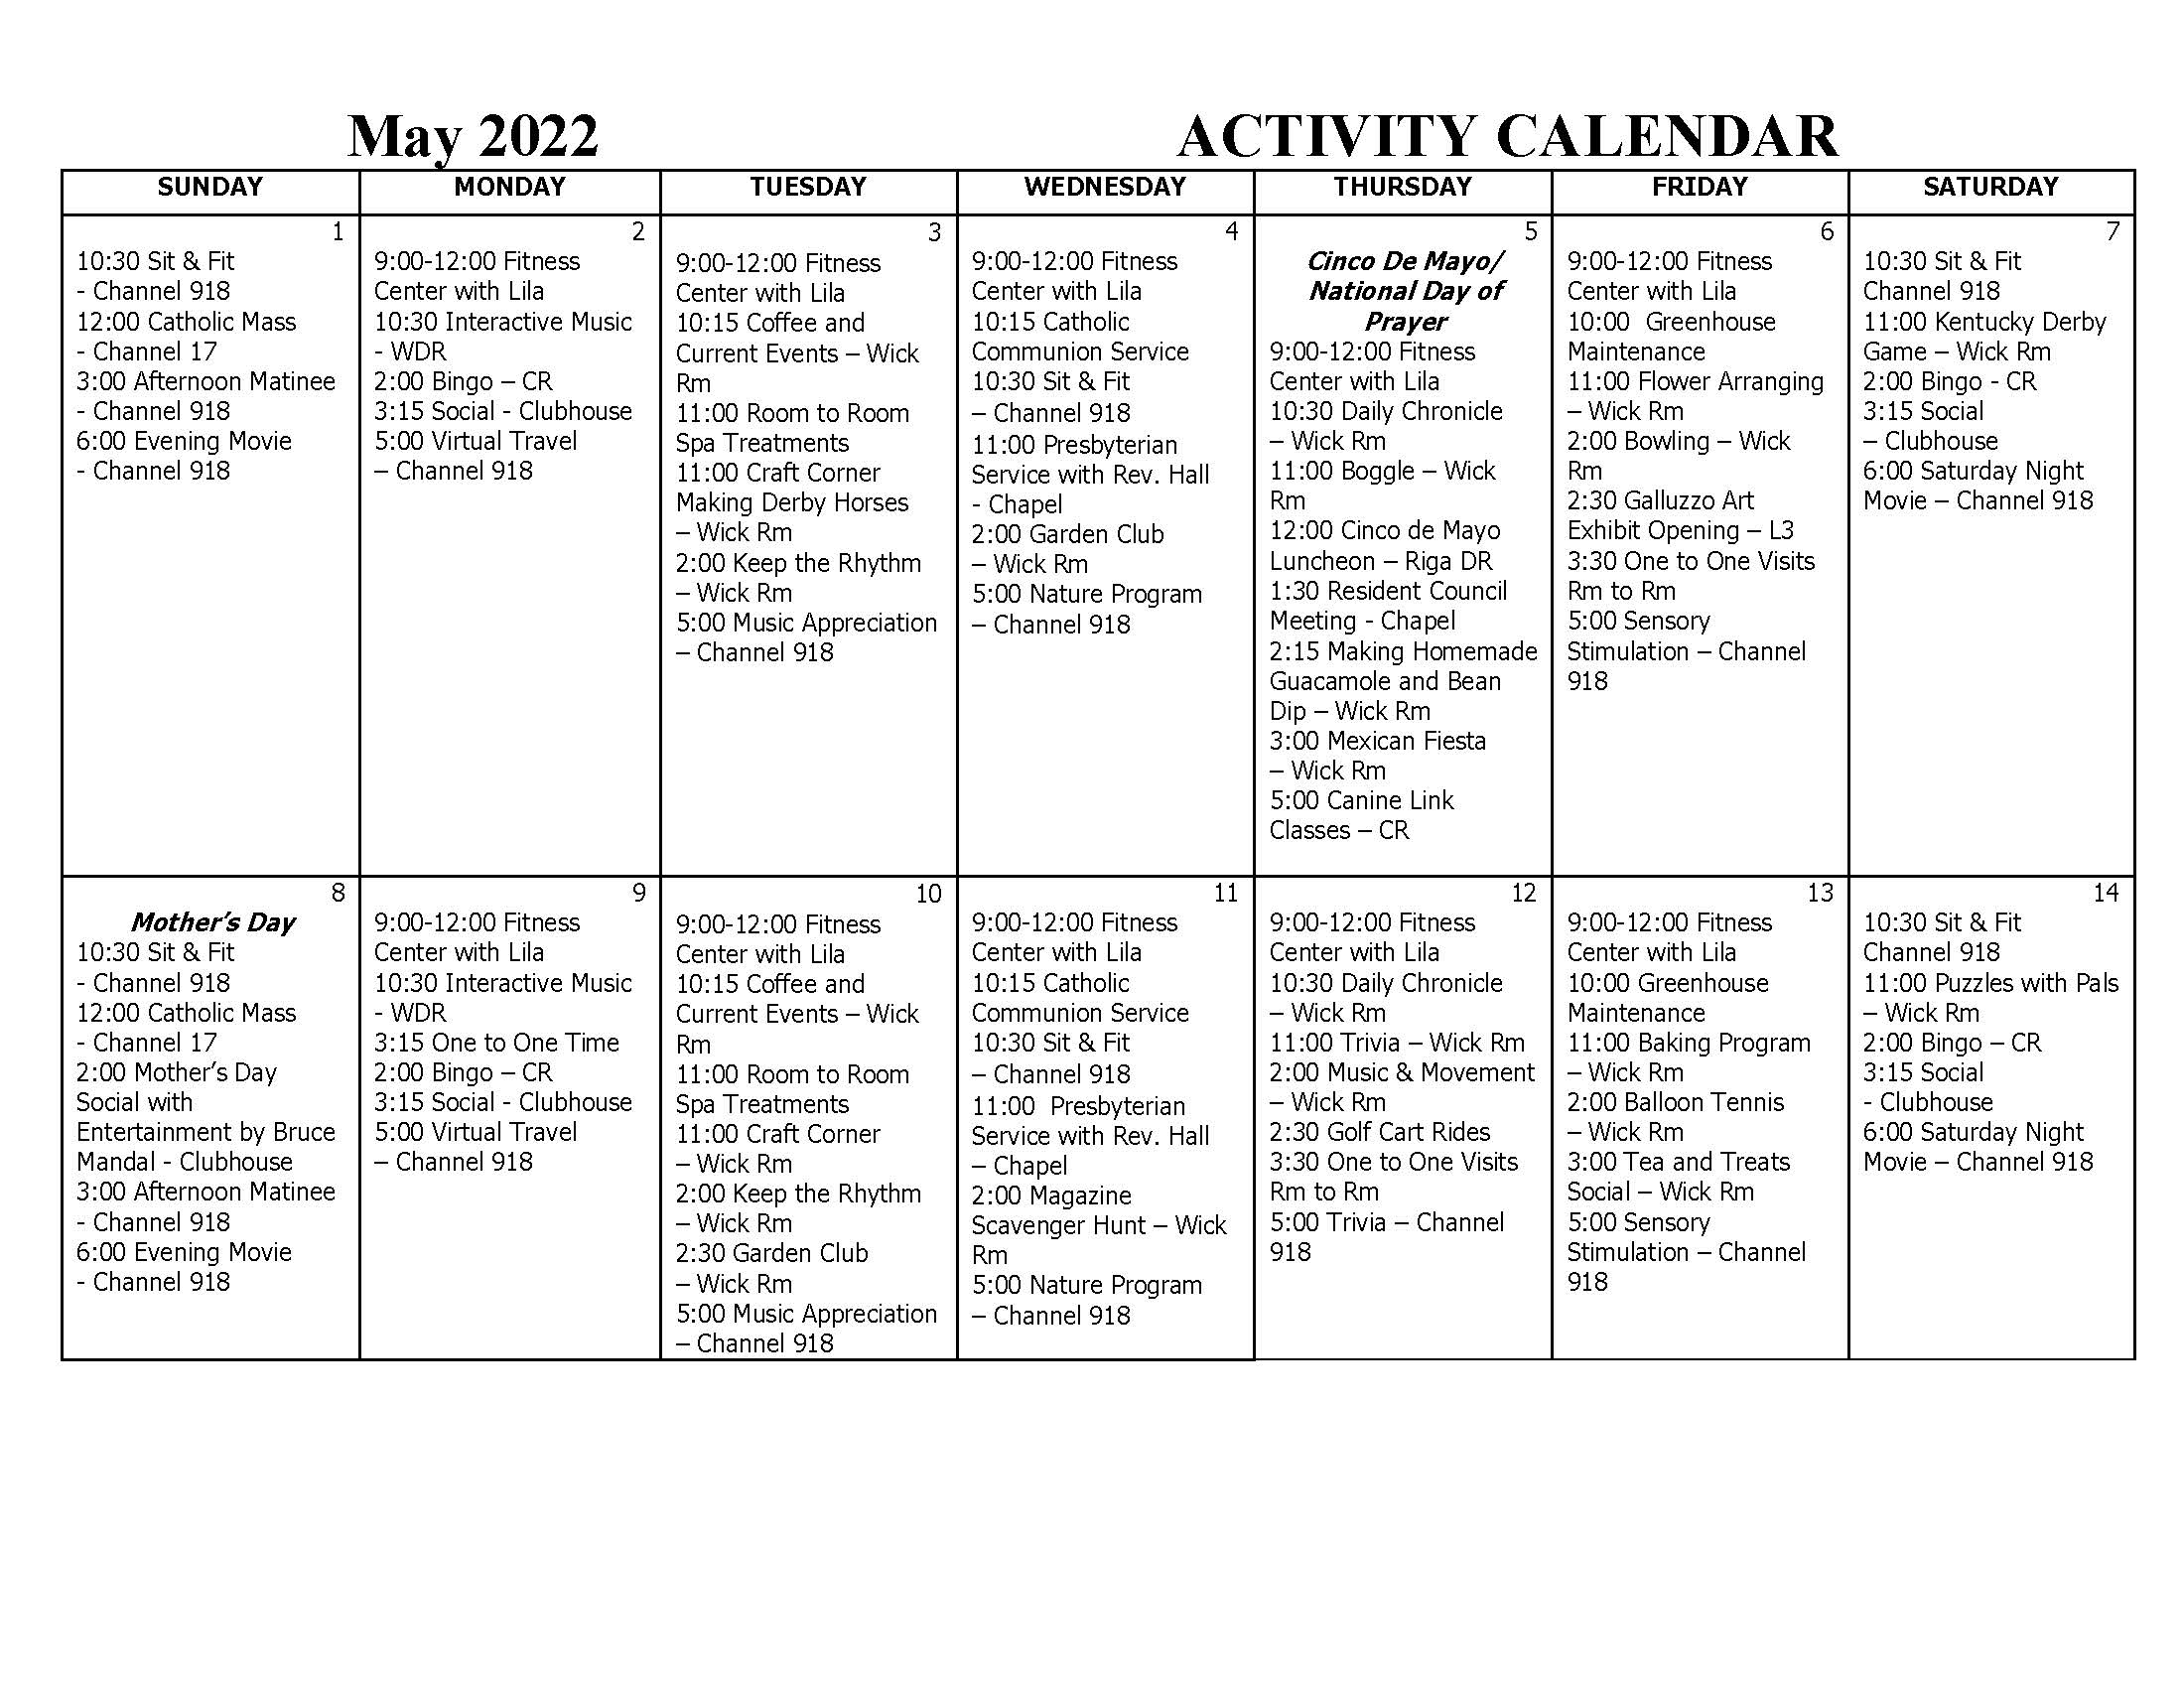 May 2022 Activity Calendar_Page_1